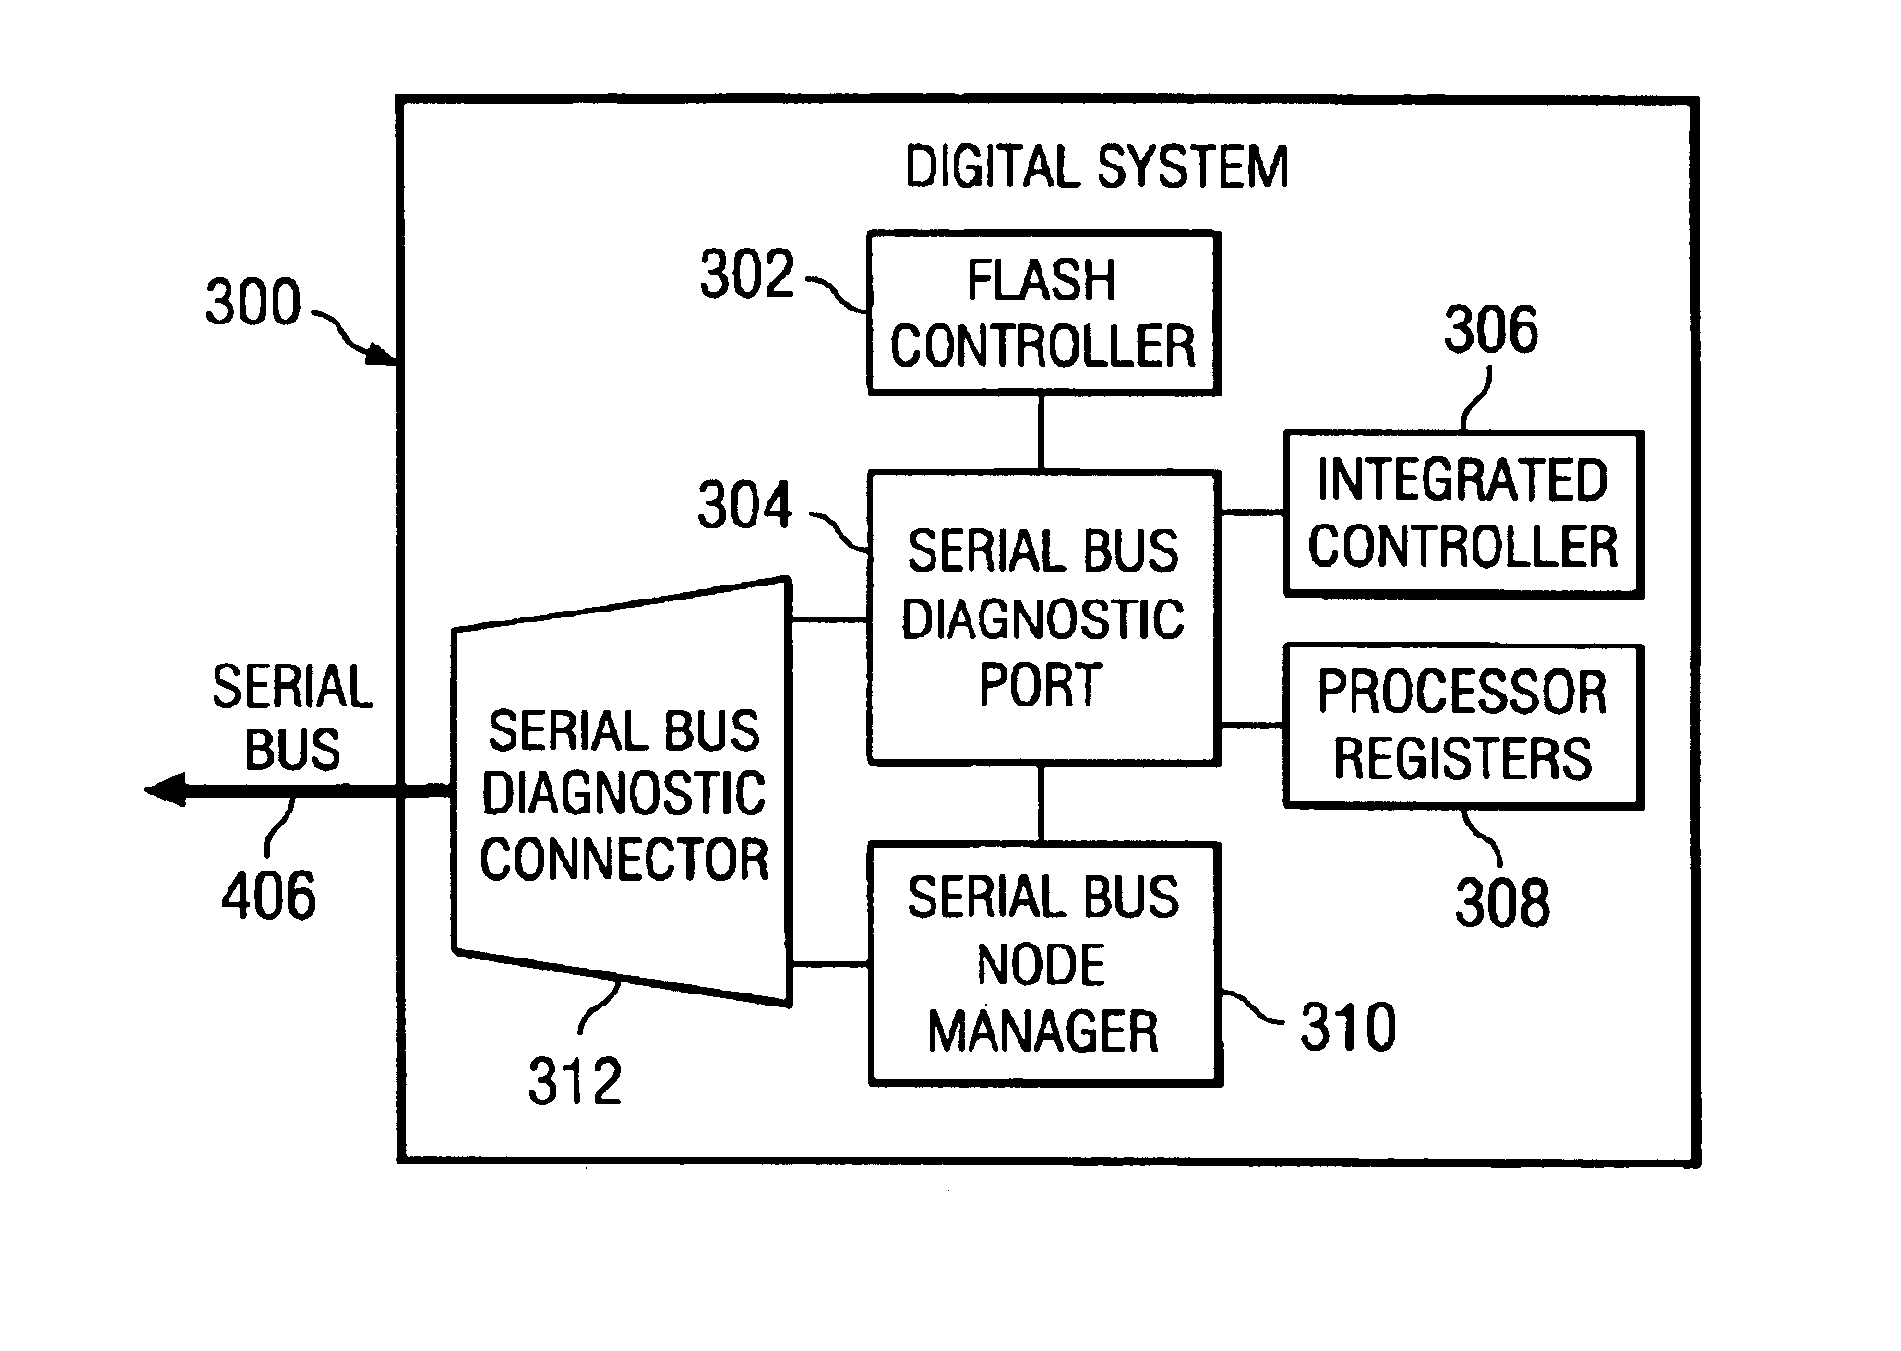 Serial bus diagnostic port of a digital system